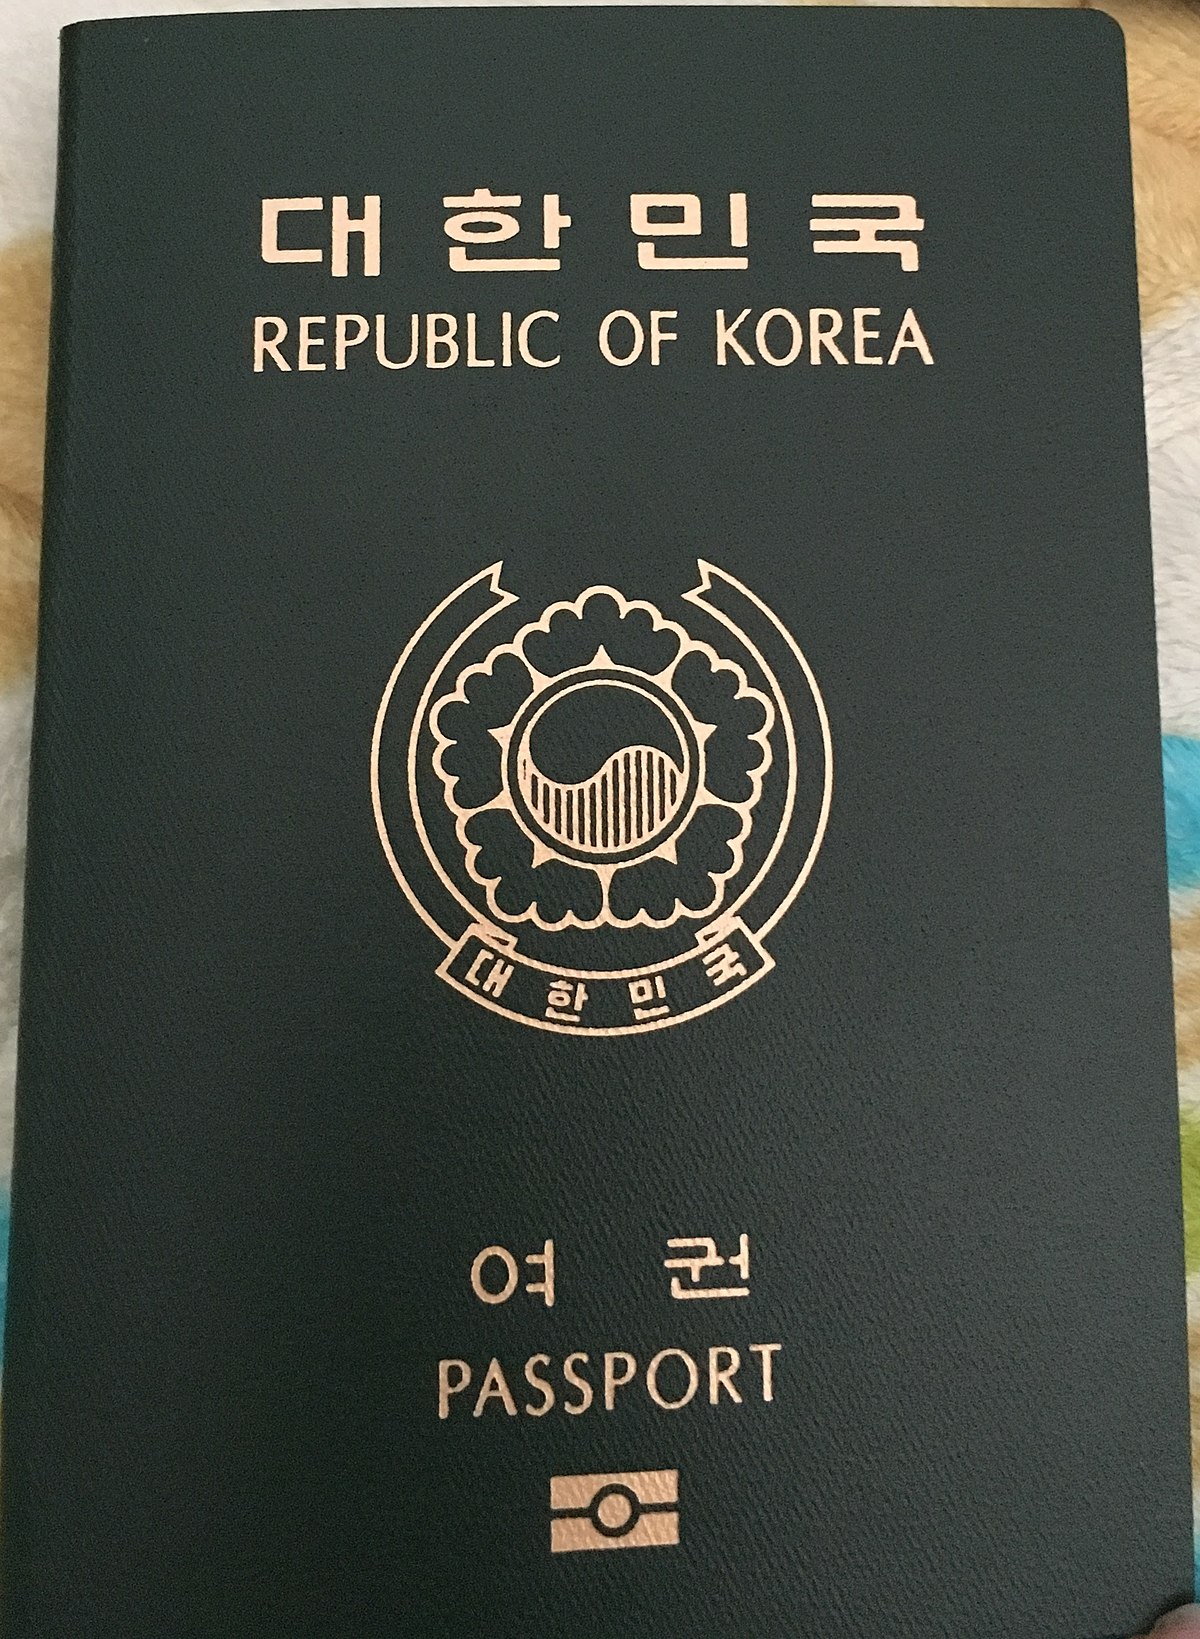 Korean passport information